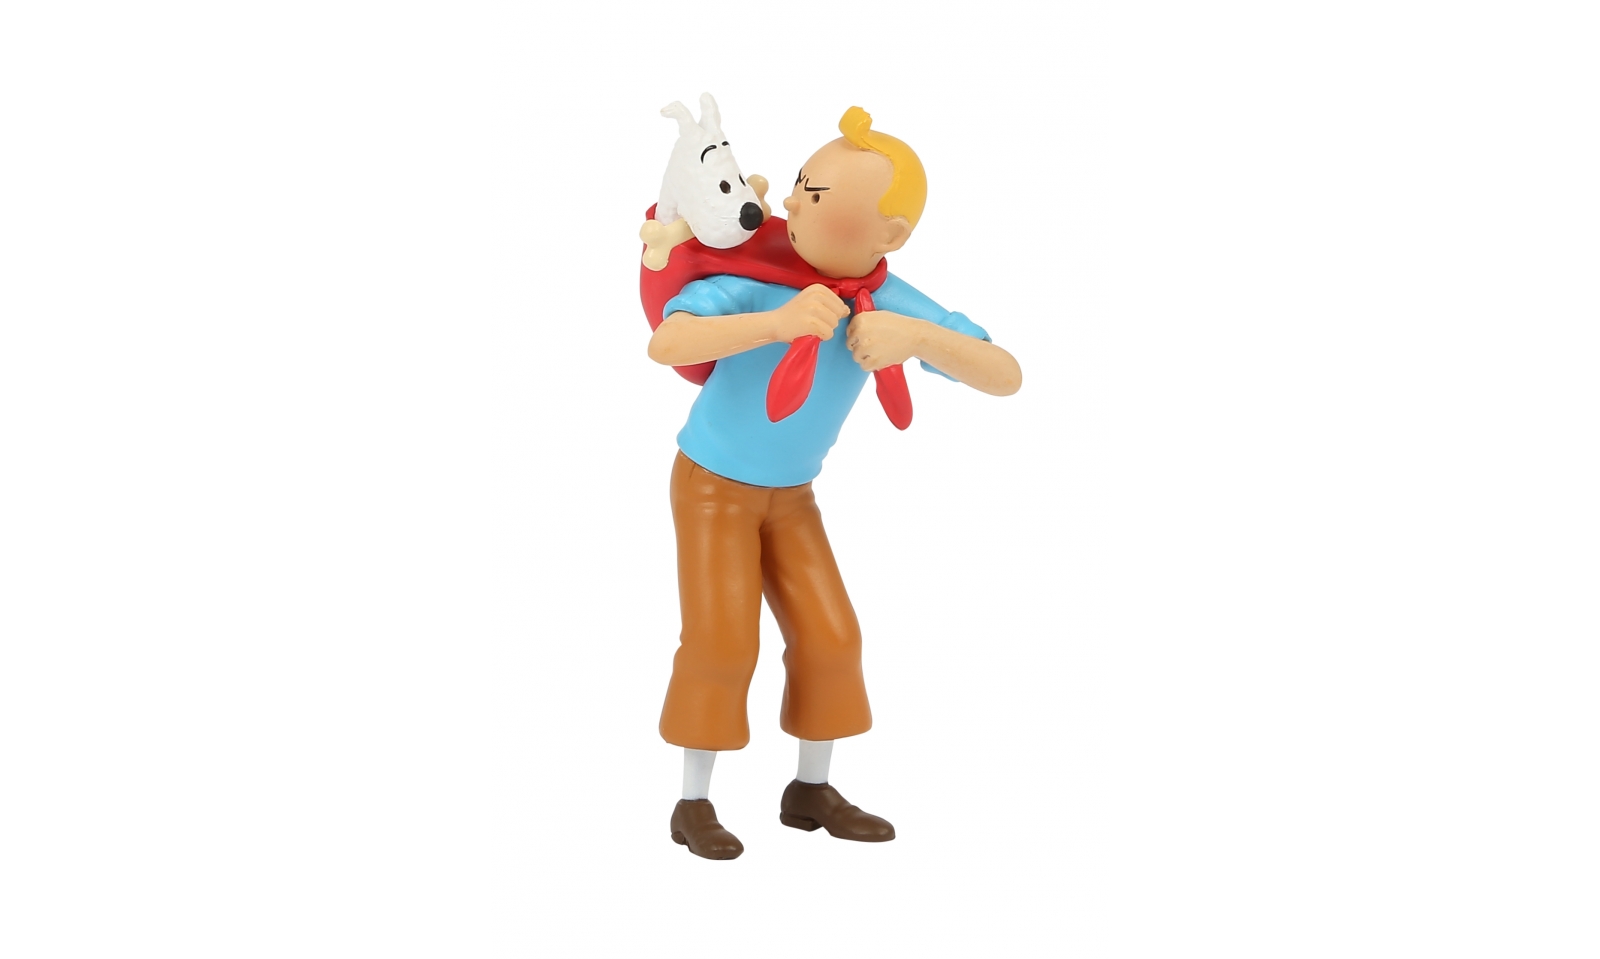 Figurine Tintin ramène Milou